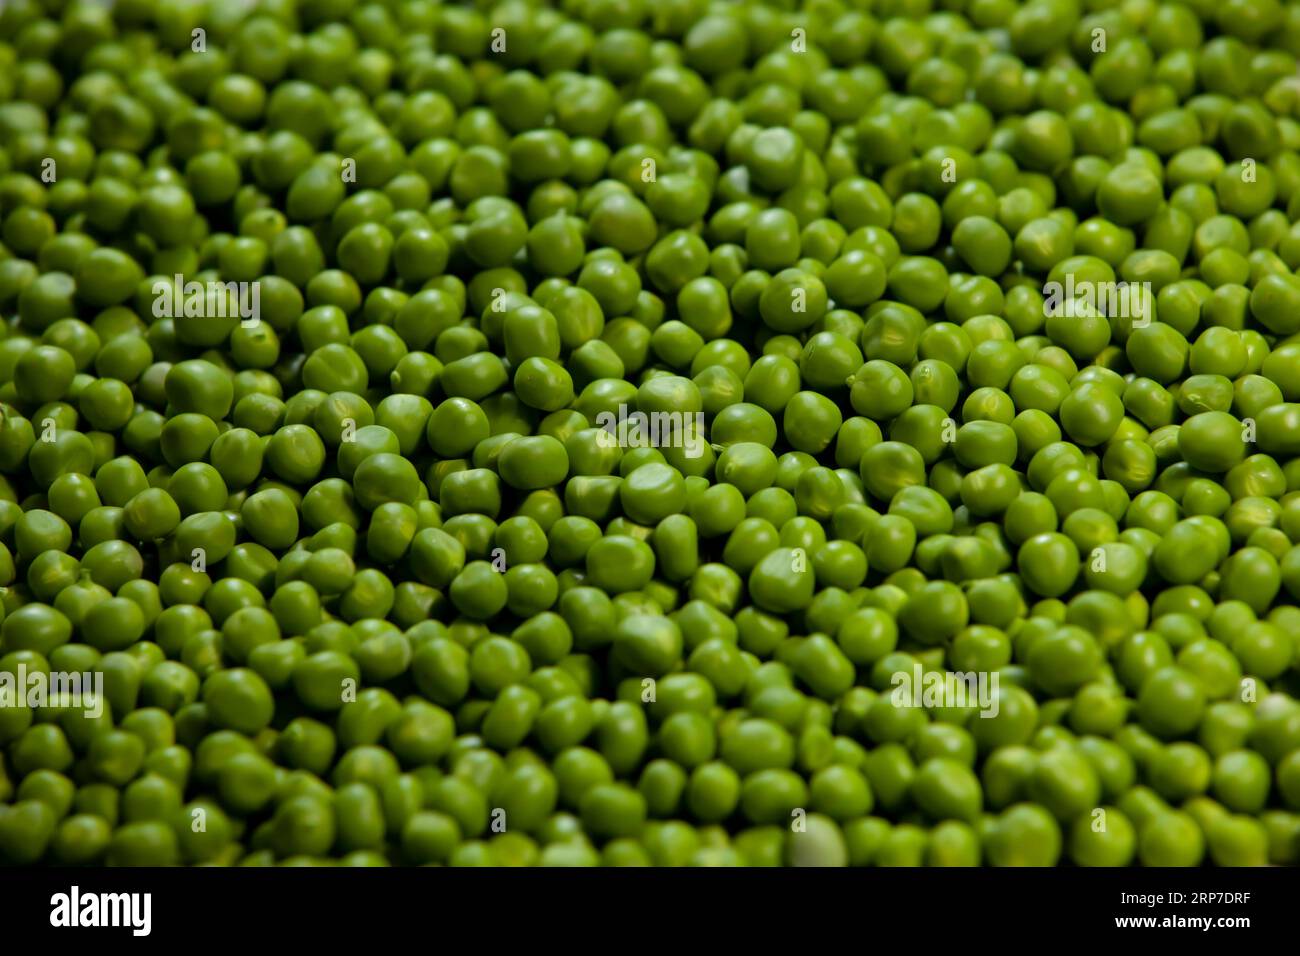 Sweet green peas background. Selective focus. Stock Photo